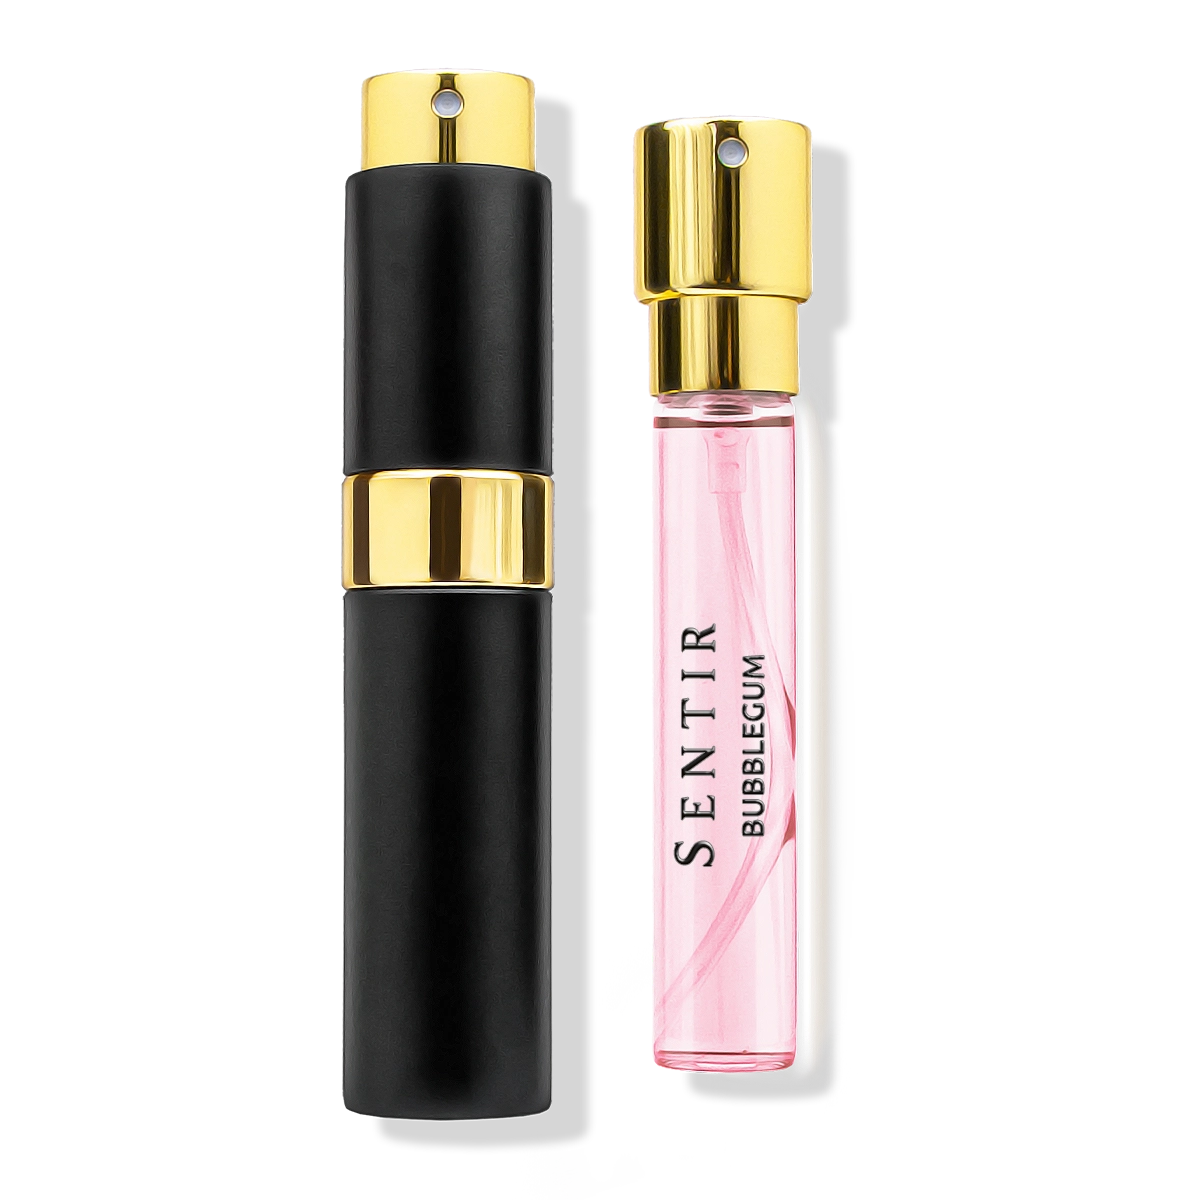 Kilian Love Don't Be Shy Parfum Dupe, Clone, Replica, Similar to, vergelijkbaar, smell-a-like, smell like, perfume like, knock off, inspired, alternative, imitation, alternative, cheap, cheapest price, best price